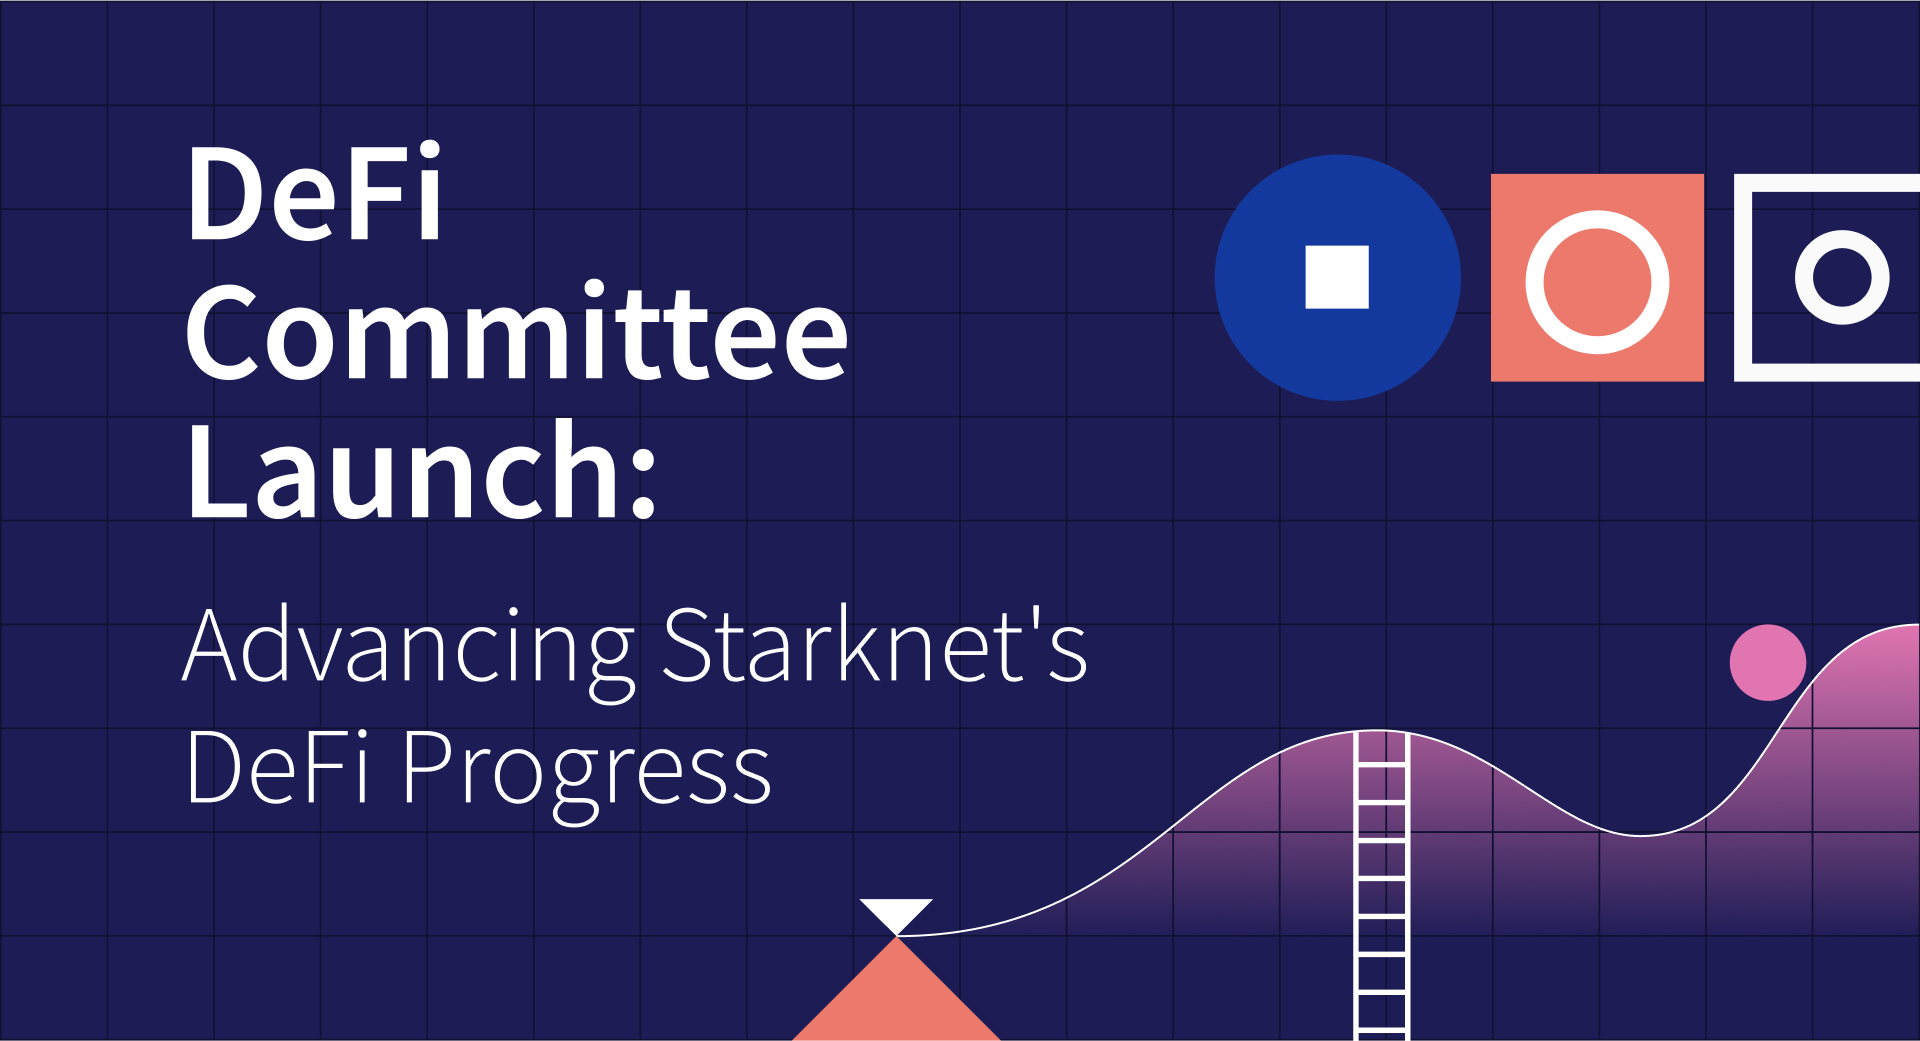 DeFi Committee Launch: Advancing Starknet's DeFi Progress